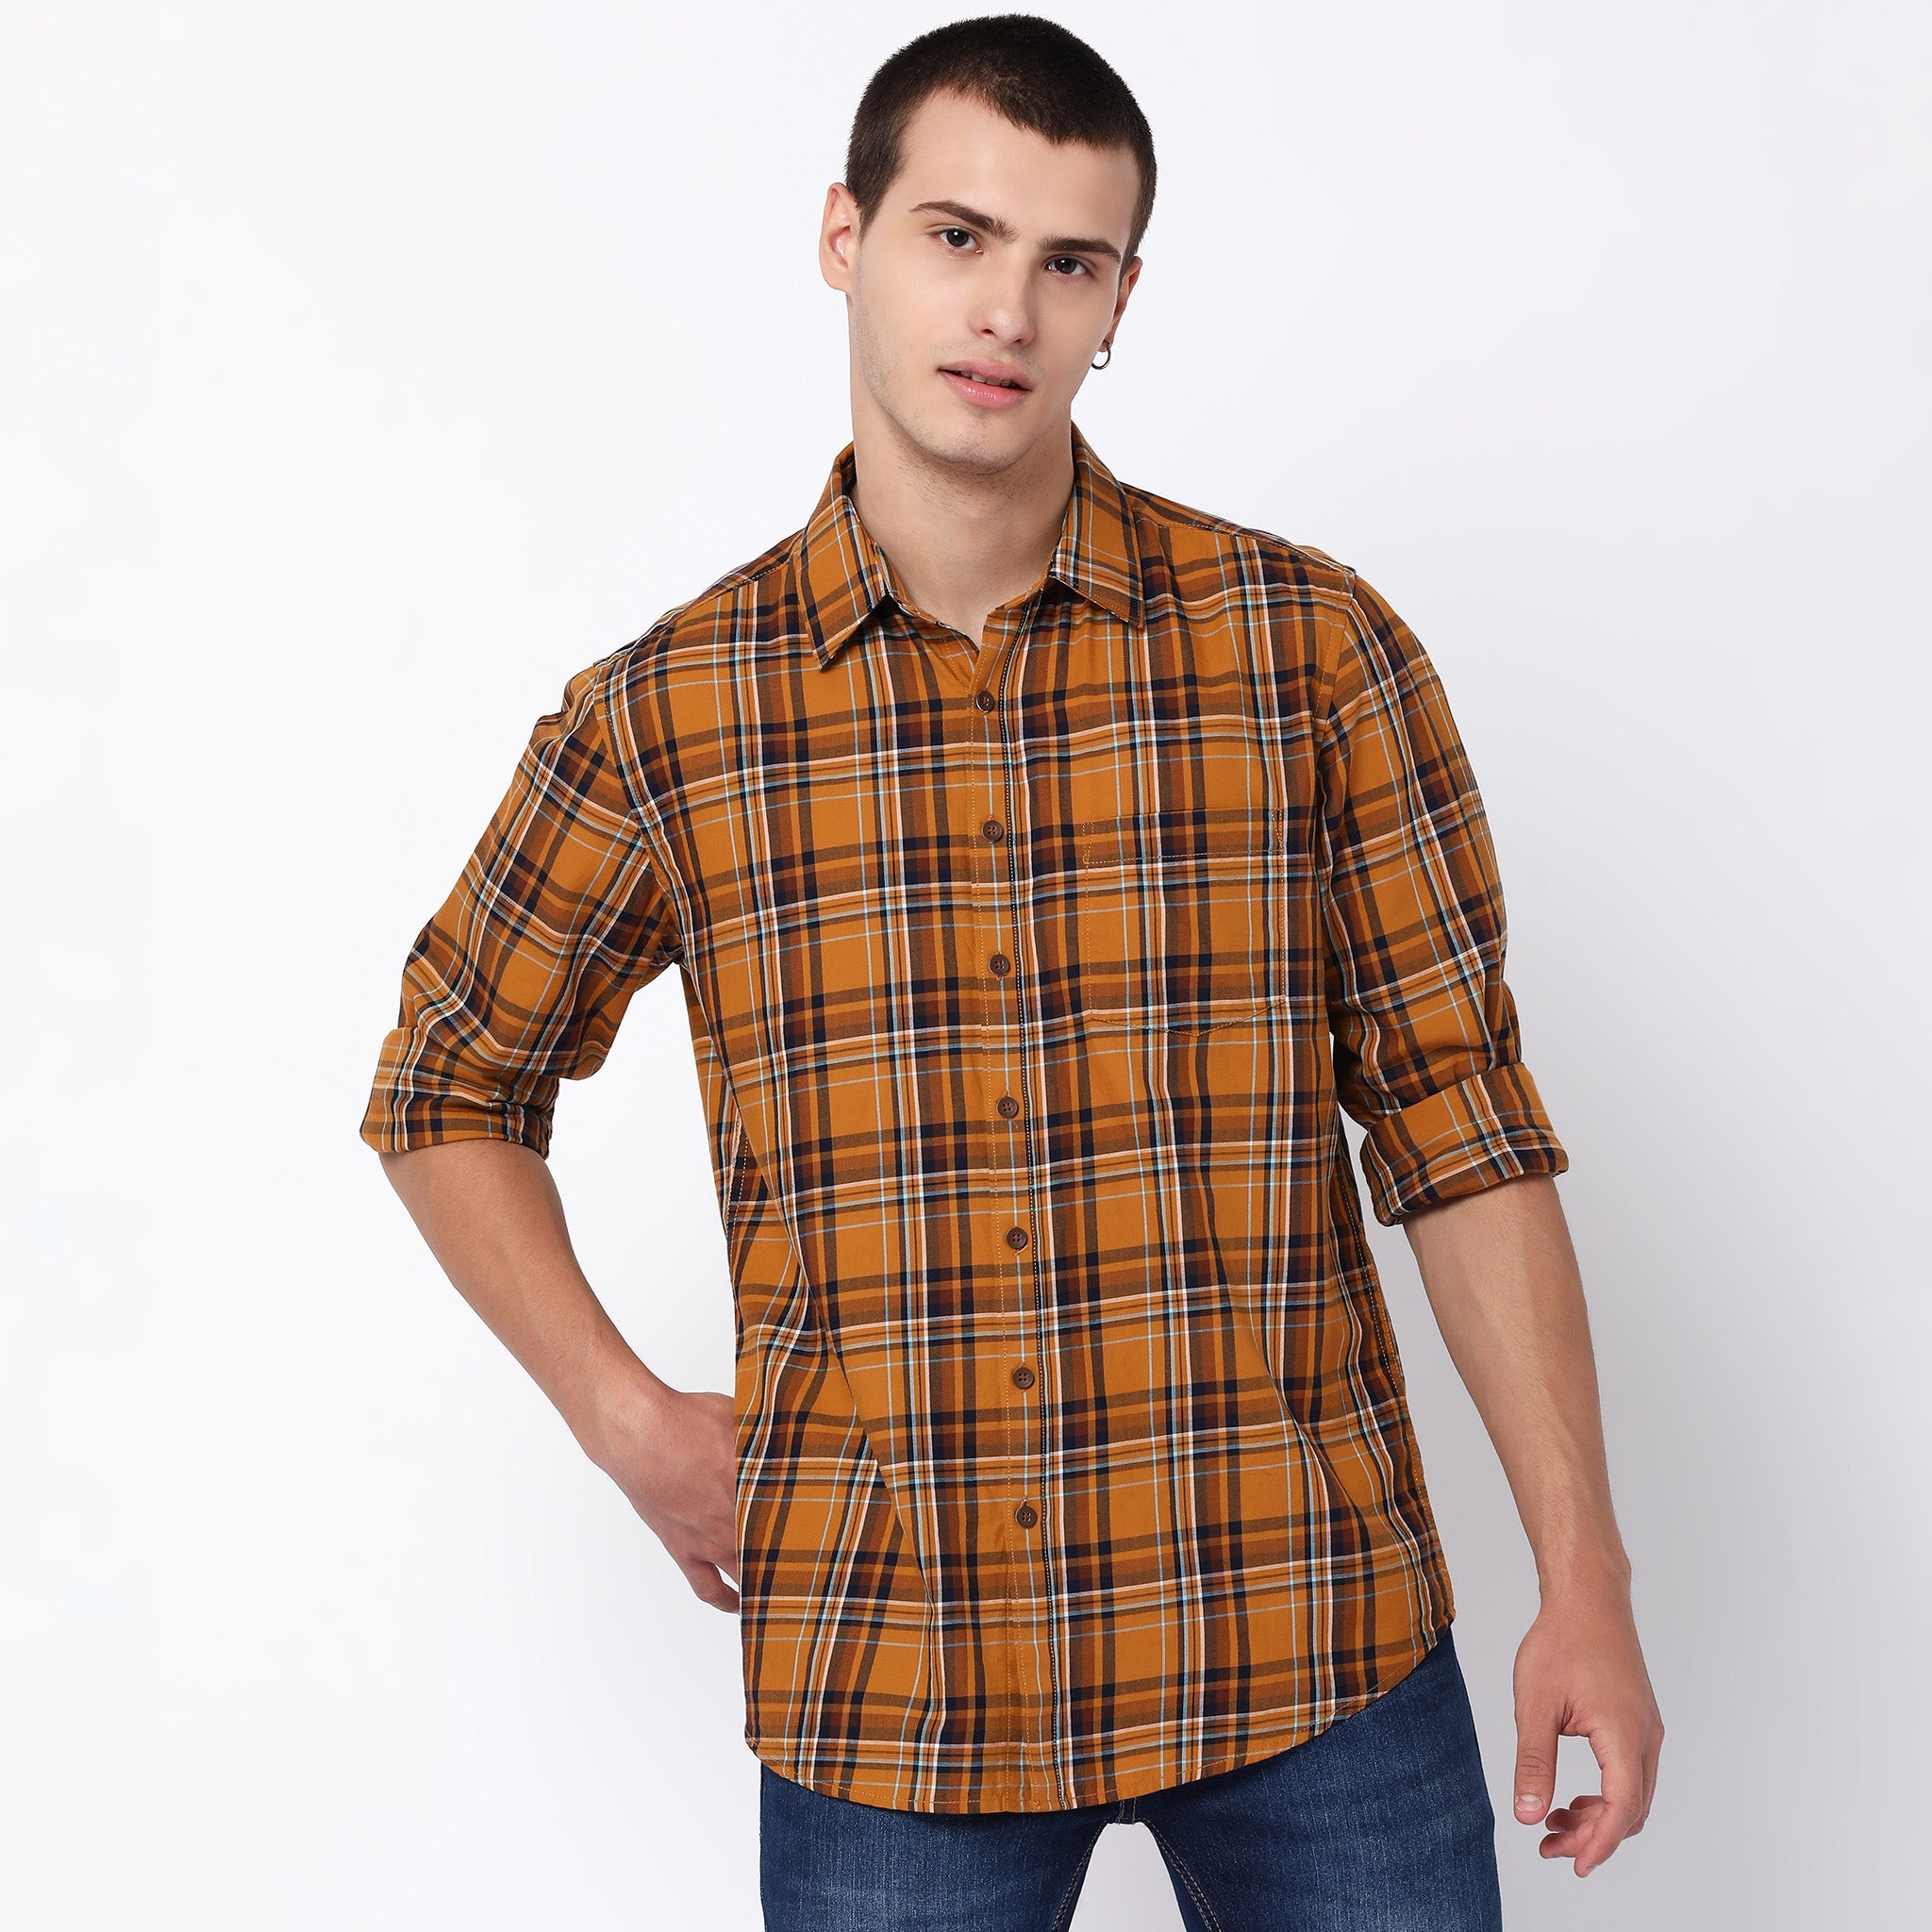 Men Wearing Regular Fit Checkered Shirt